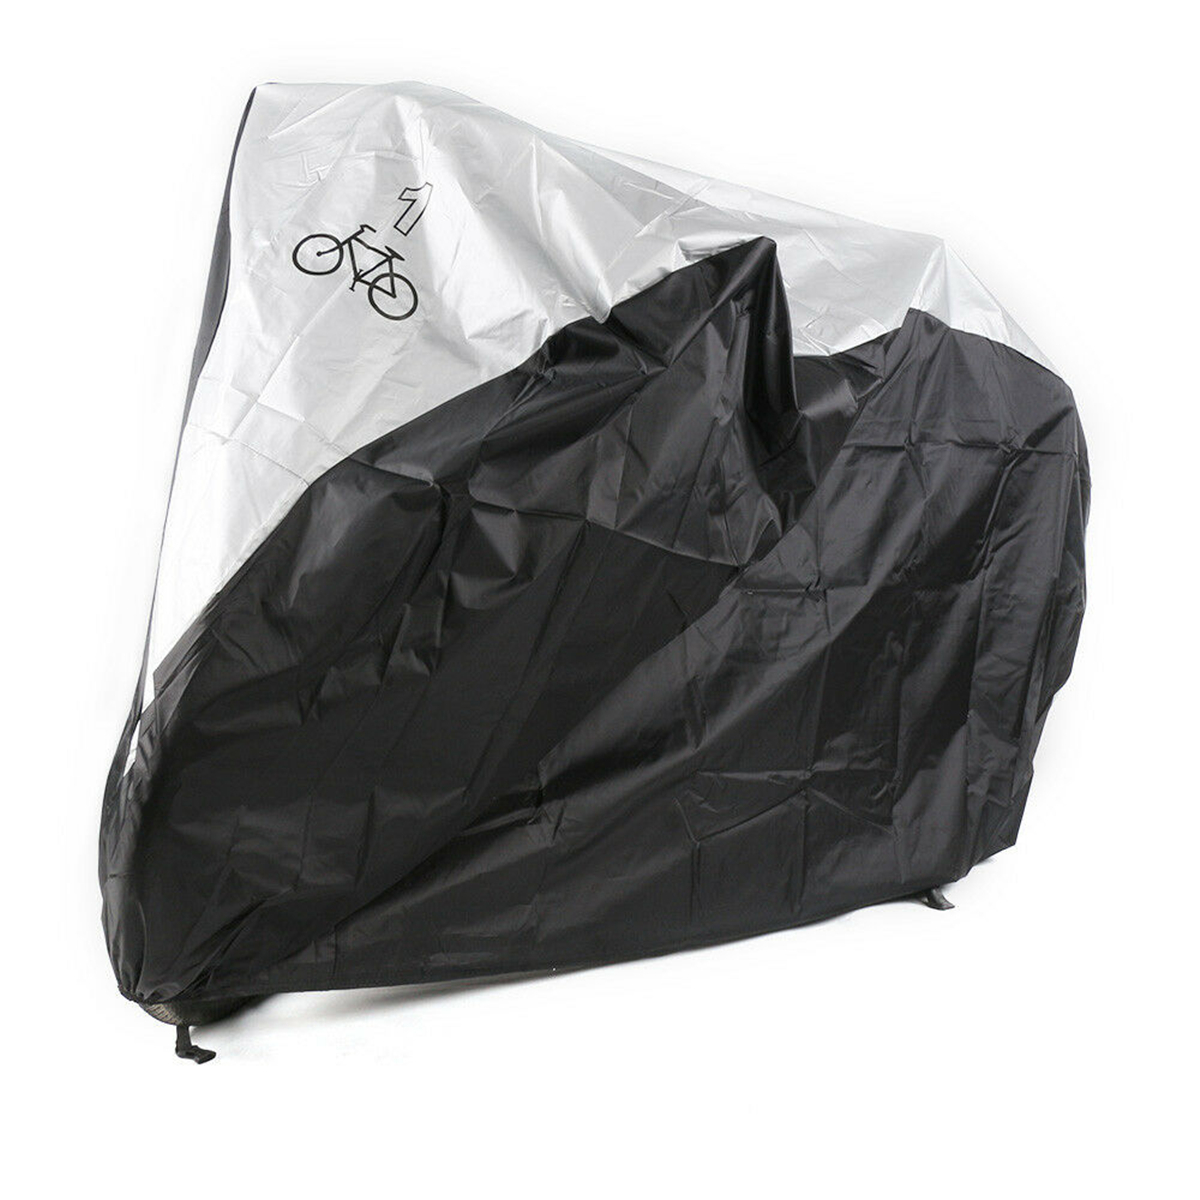 Bicicleta Mountain Bike Scooter cubierta impermeable al aire libre anti UV lluvia polvo